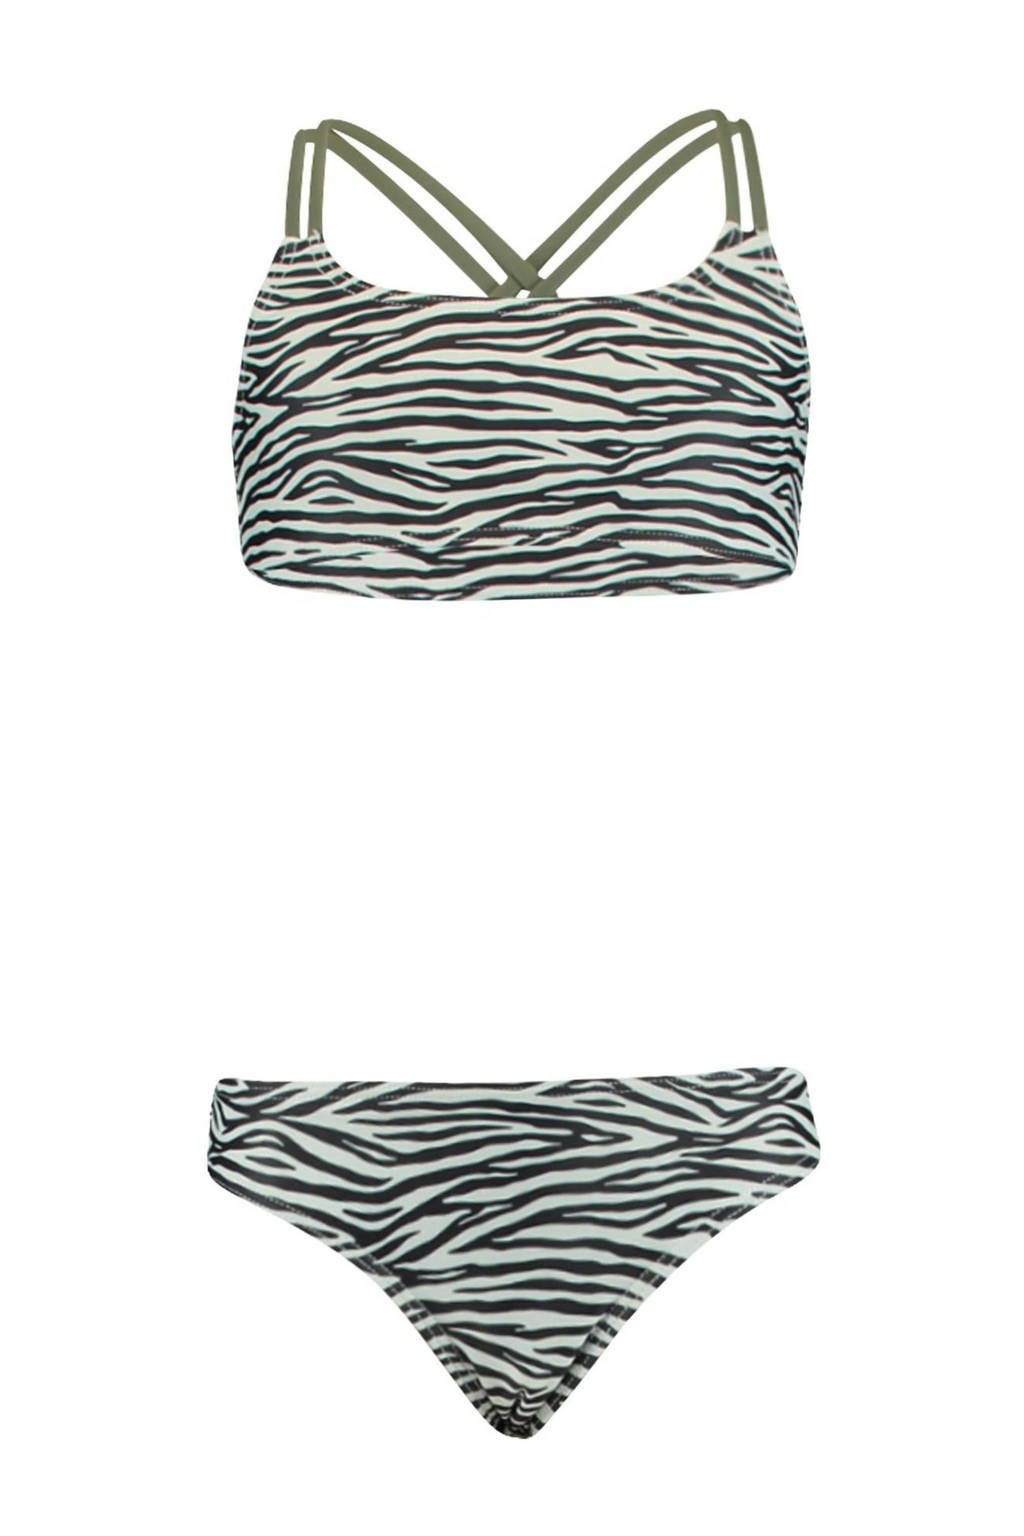 CoolCat Junior crop bikini Yosi met zebraprint zwart/wit